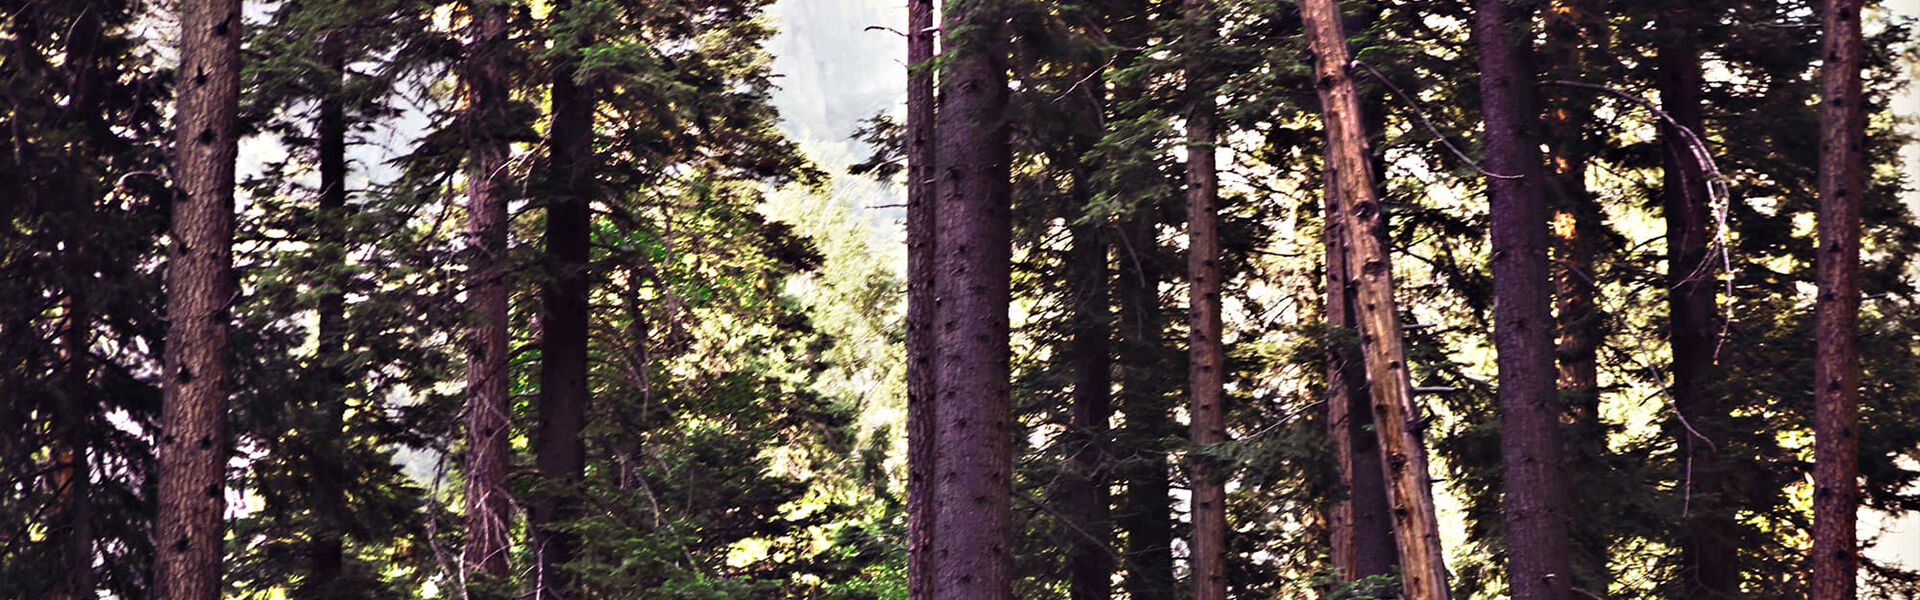 A closeup photograph of pine trees.